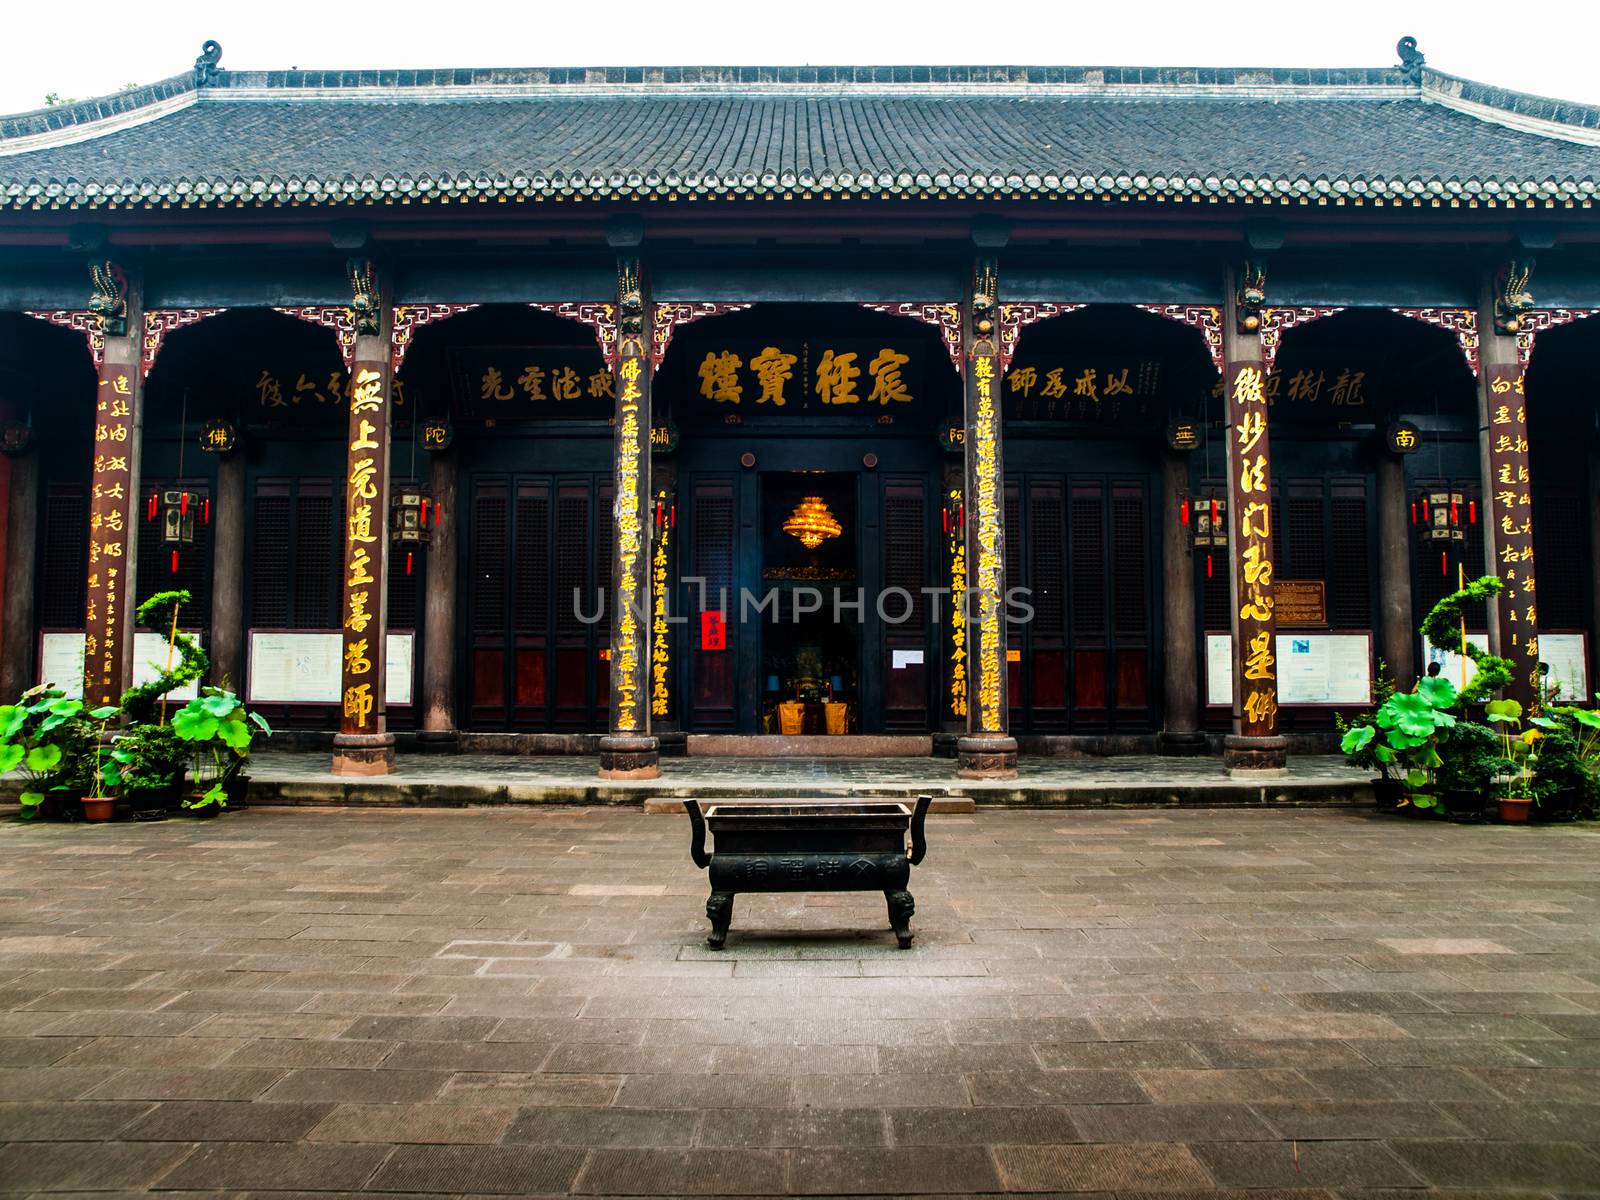 Wenshu monastery by pyty